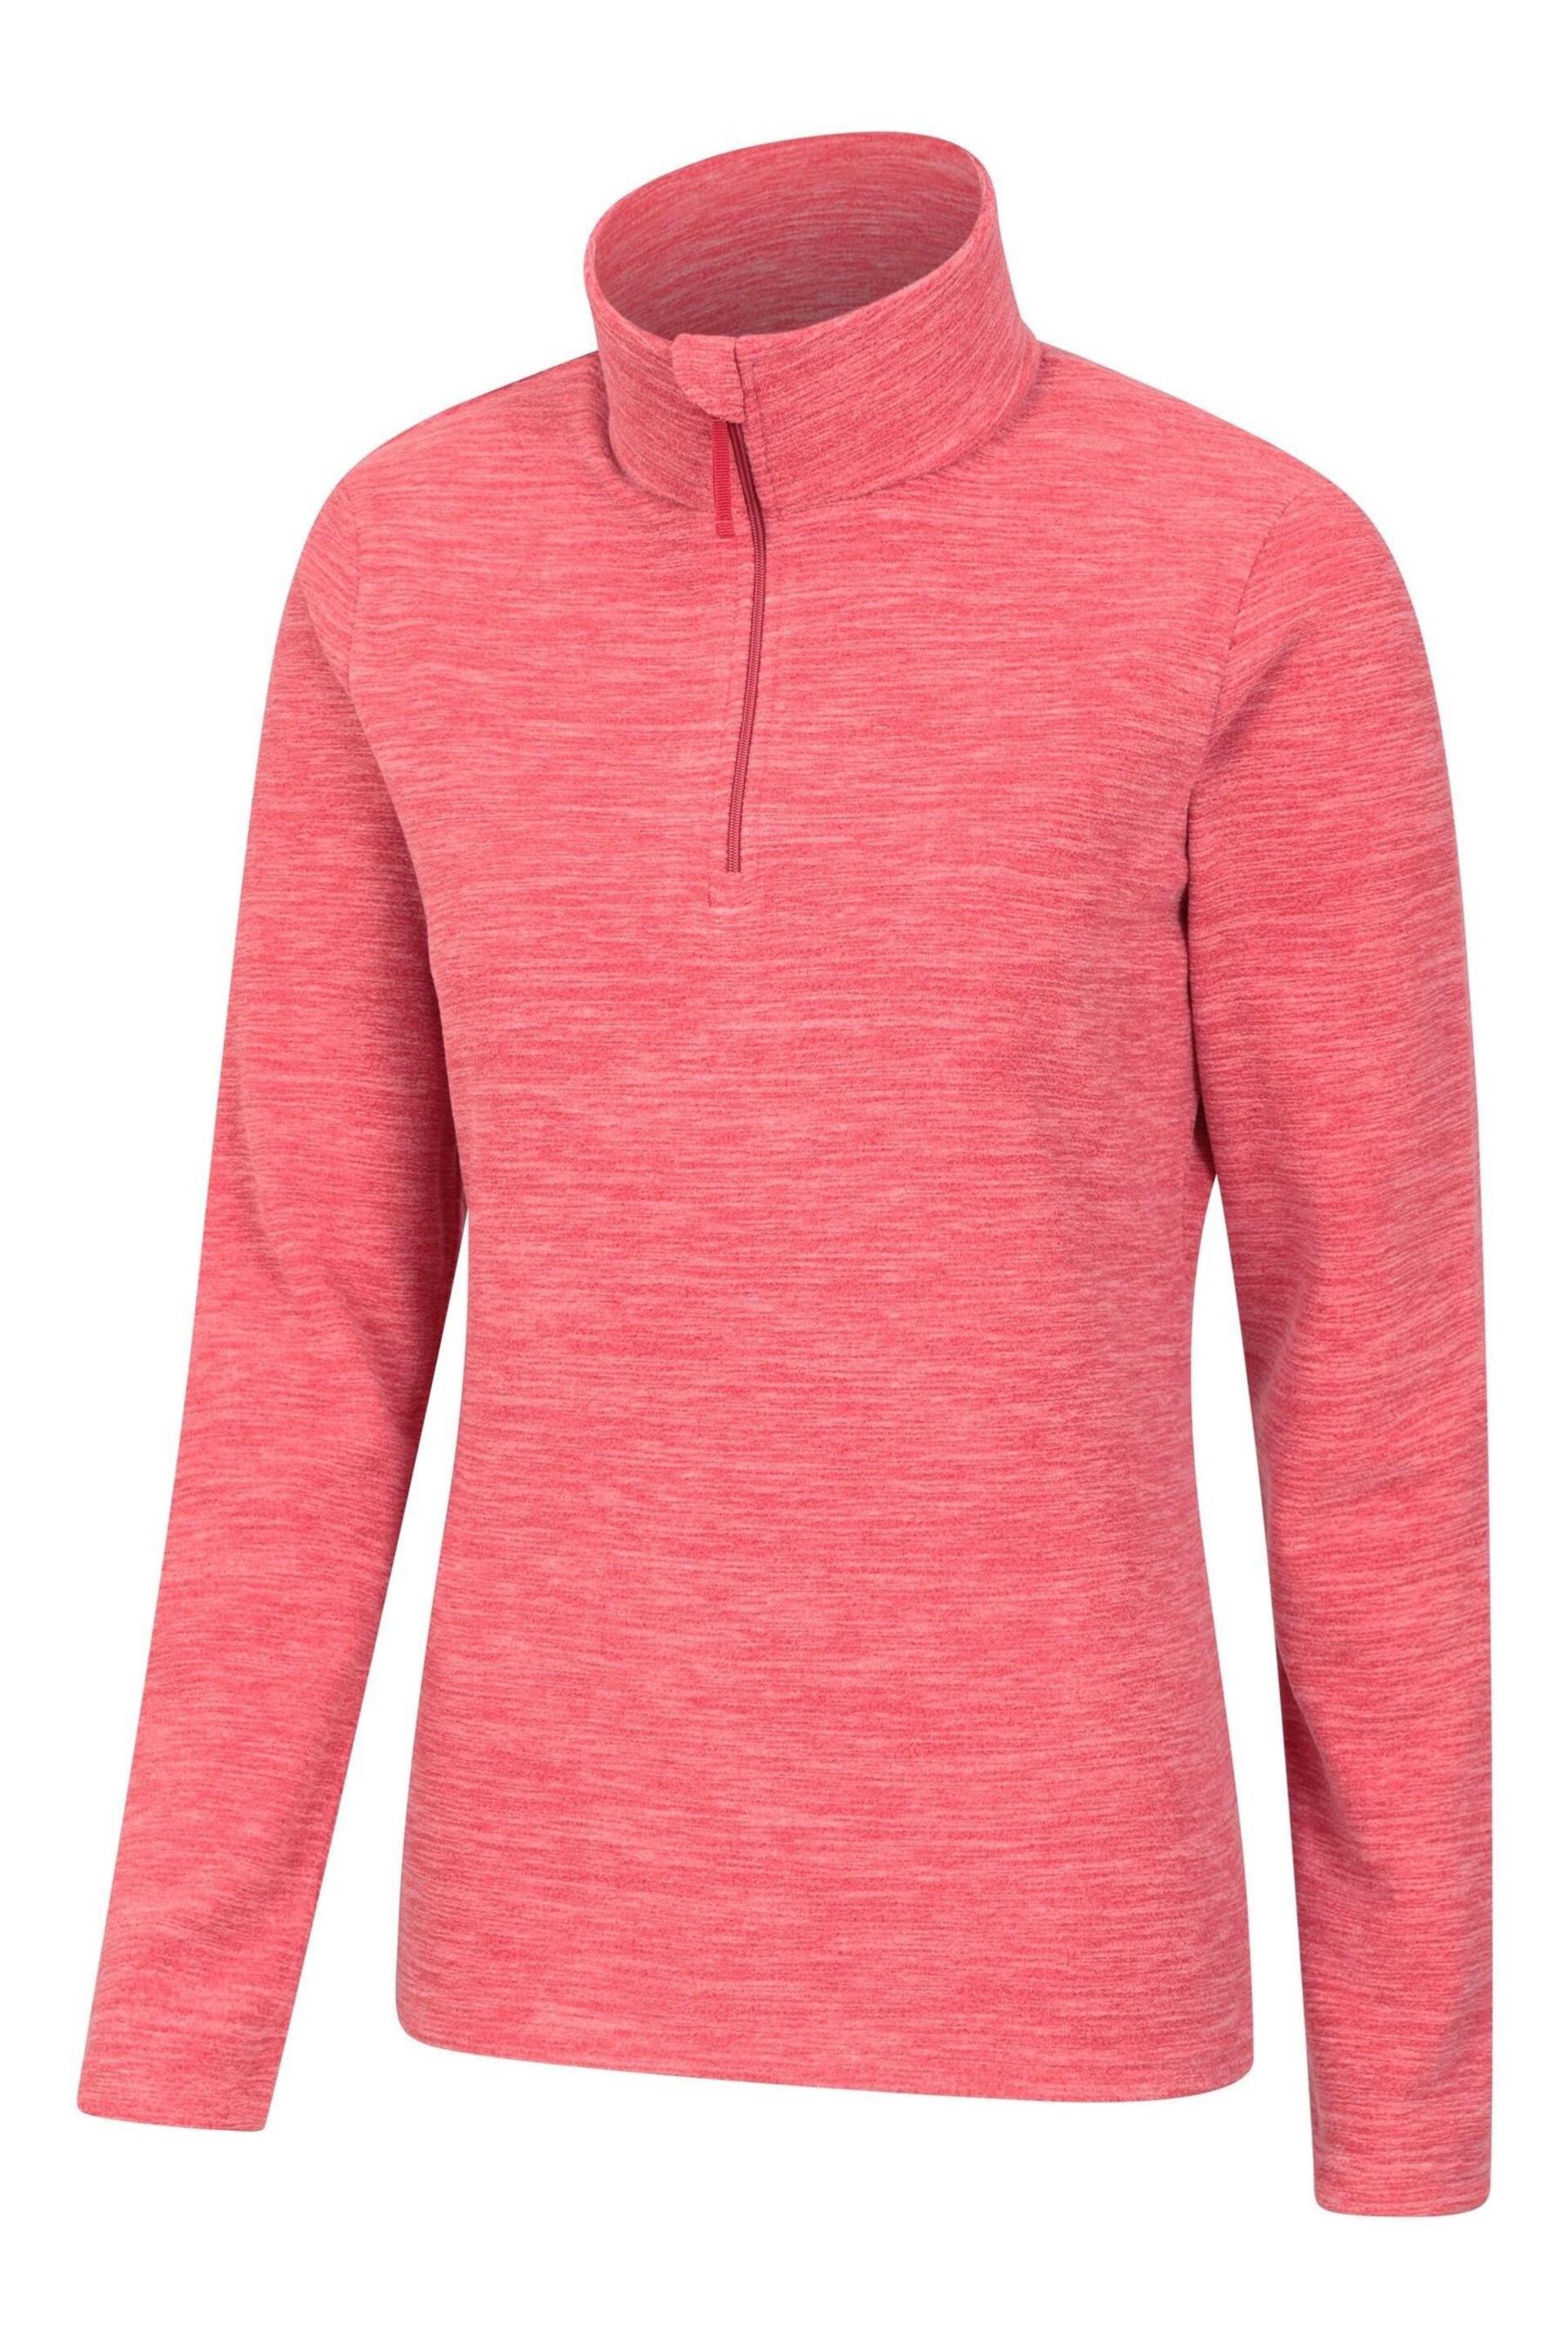 Mountain Warehouse Coral Pink Womens Snowdon Melange Half-Zip Fleece - Image 3 of 3